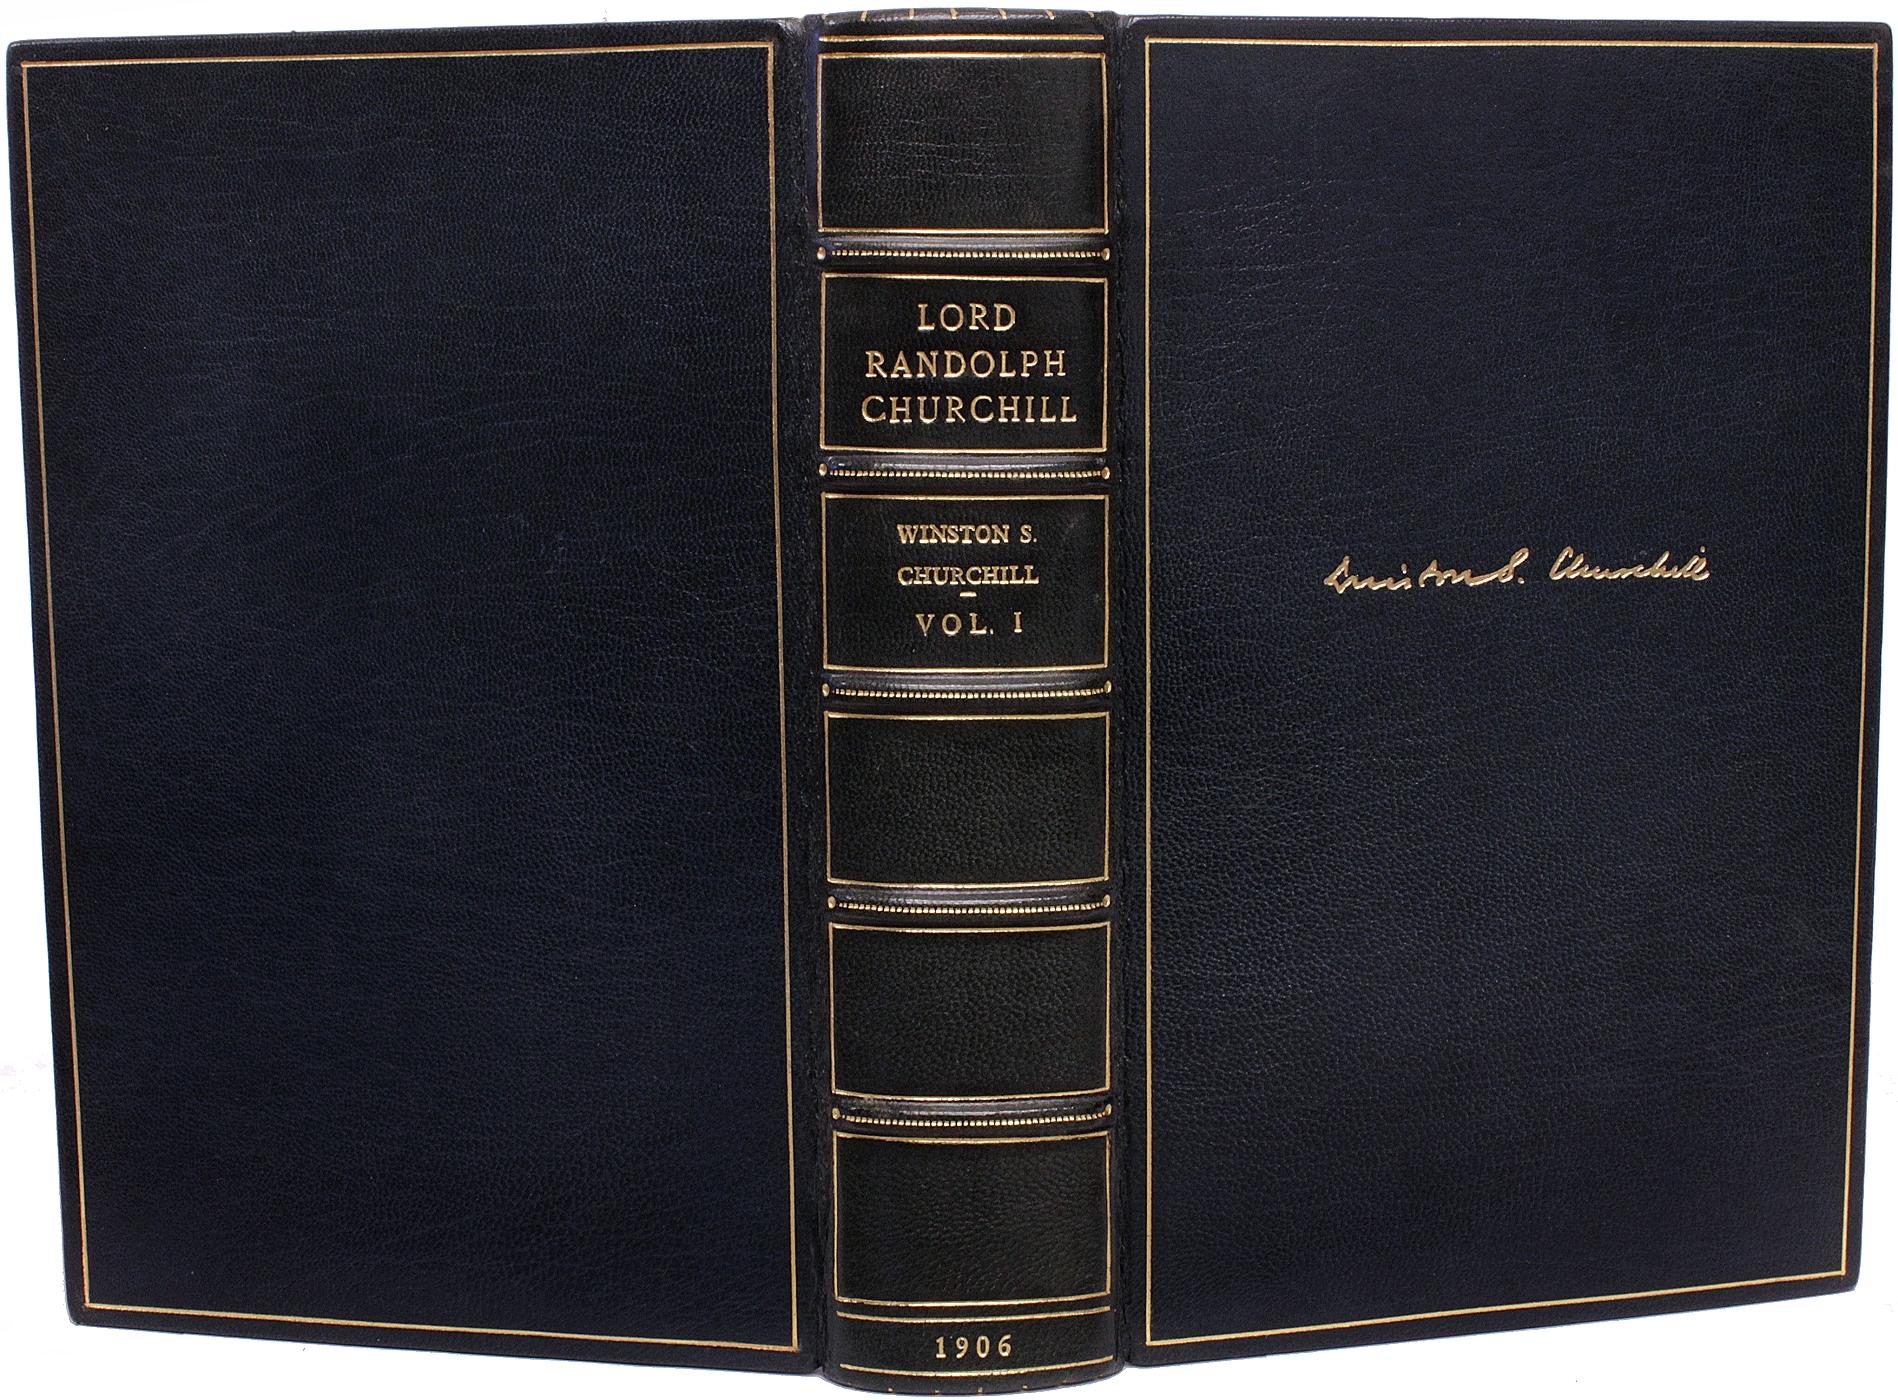 AUTHOR: CHURCHILL, Winston. 

TITLE: Lord Randolph Churchill.

PUBLISHER: London: Hodder & Stoughton, 1906.

DESCRIPTION: FIRST EDITION. 2 vols., 8-11/16